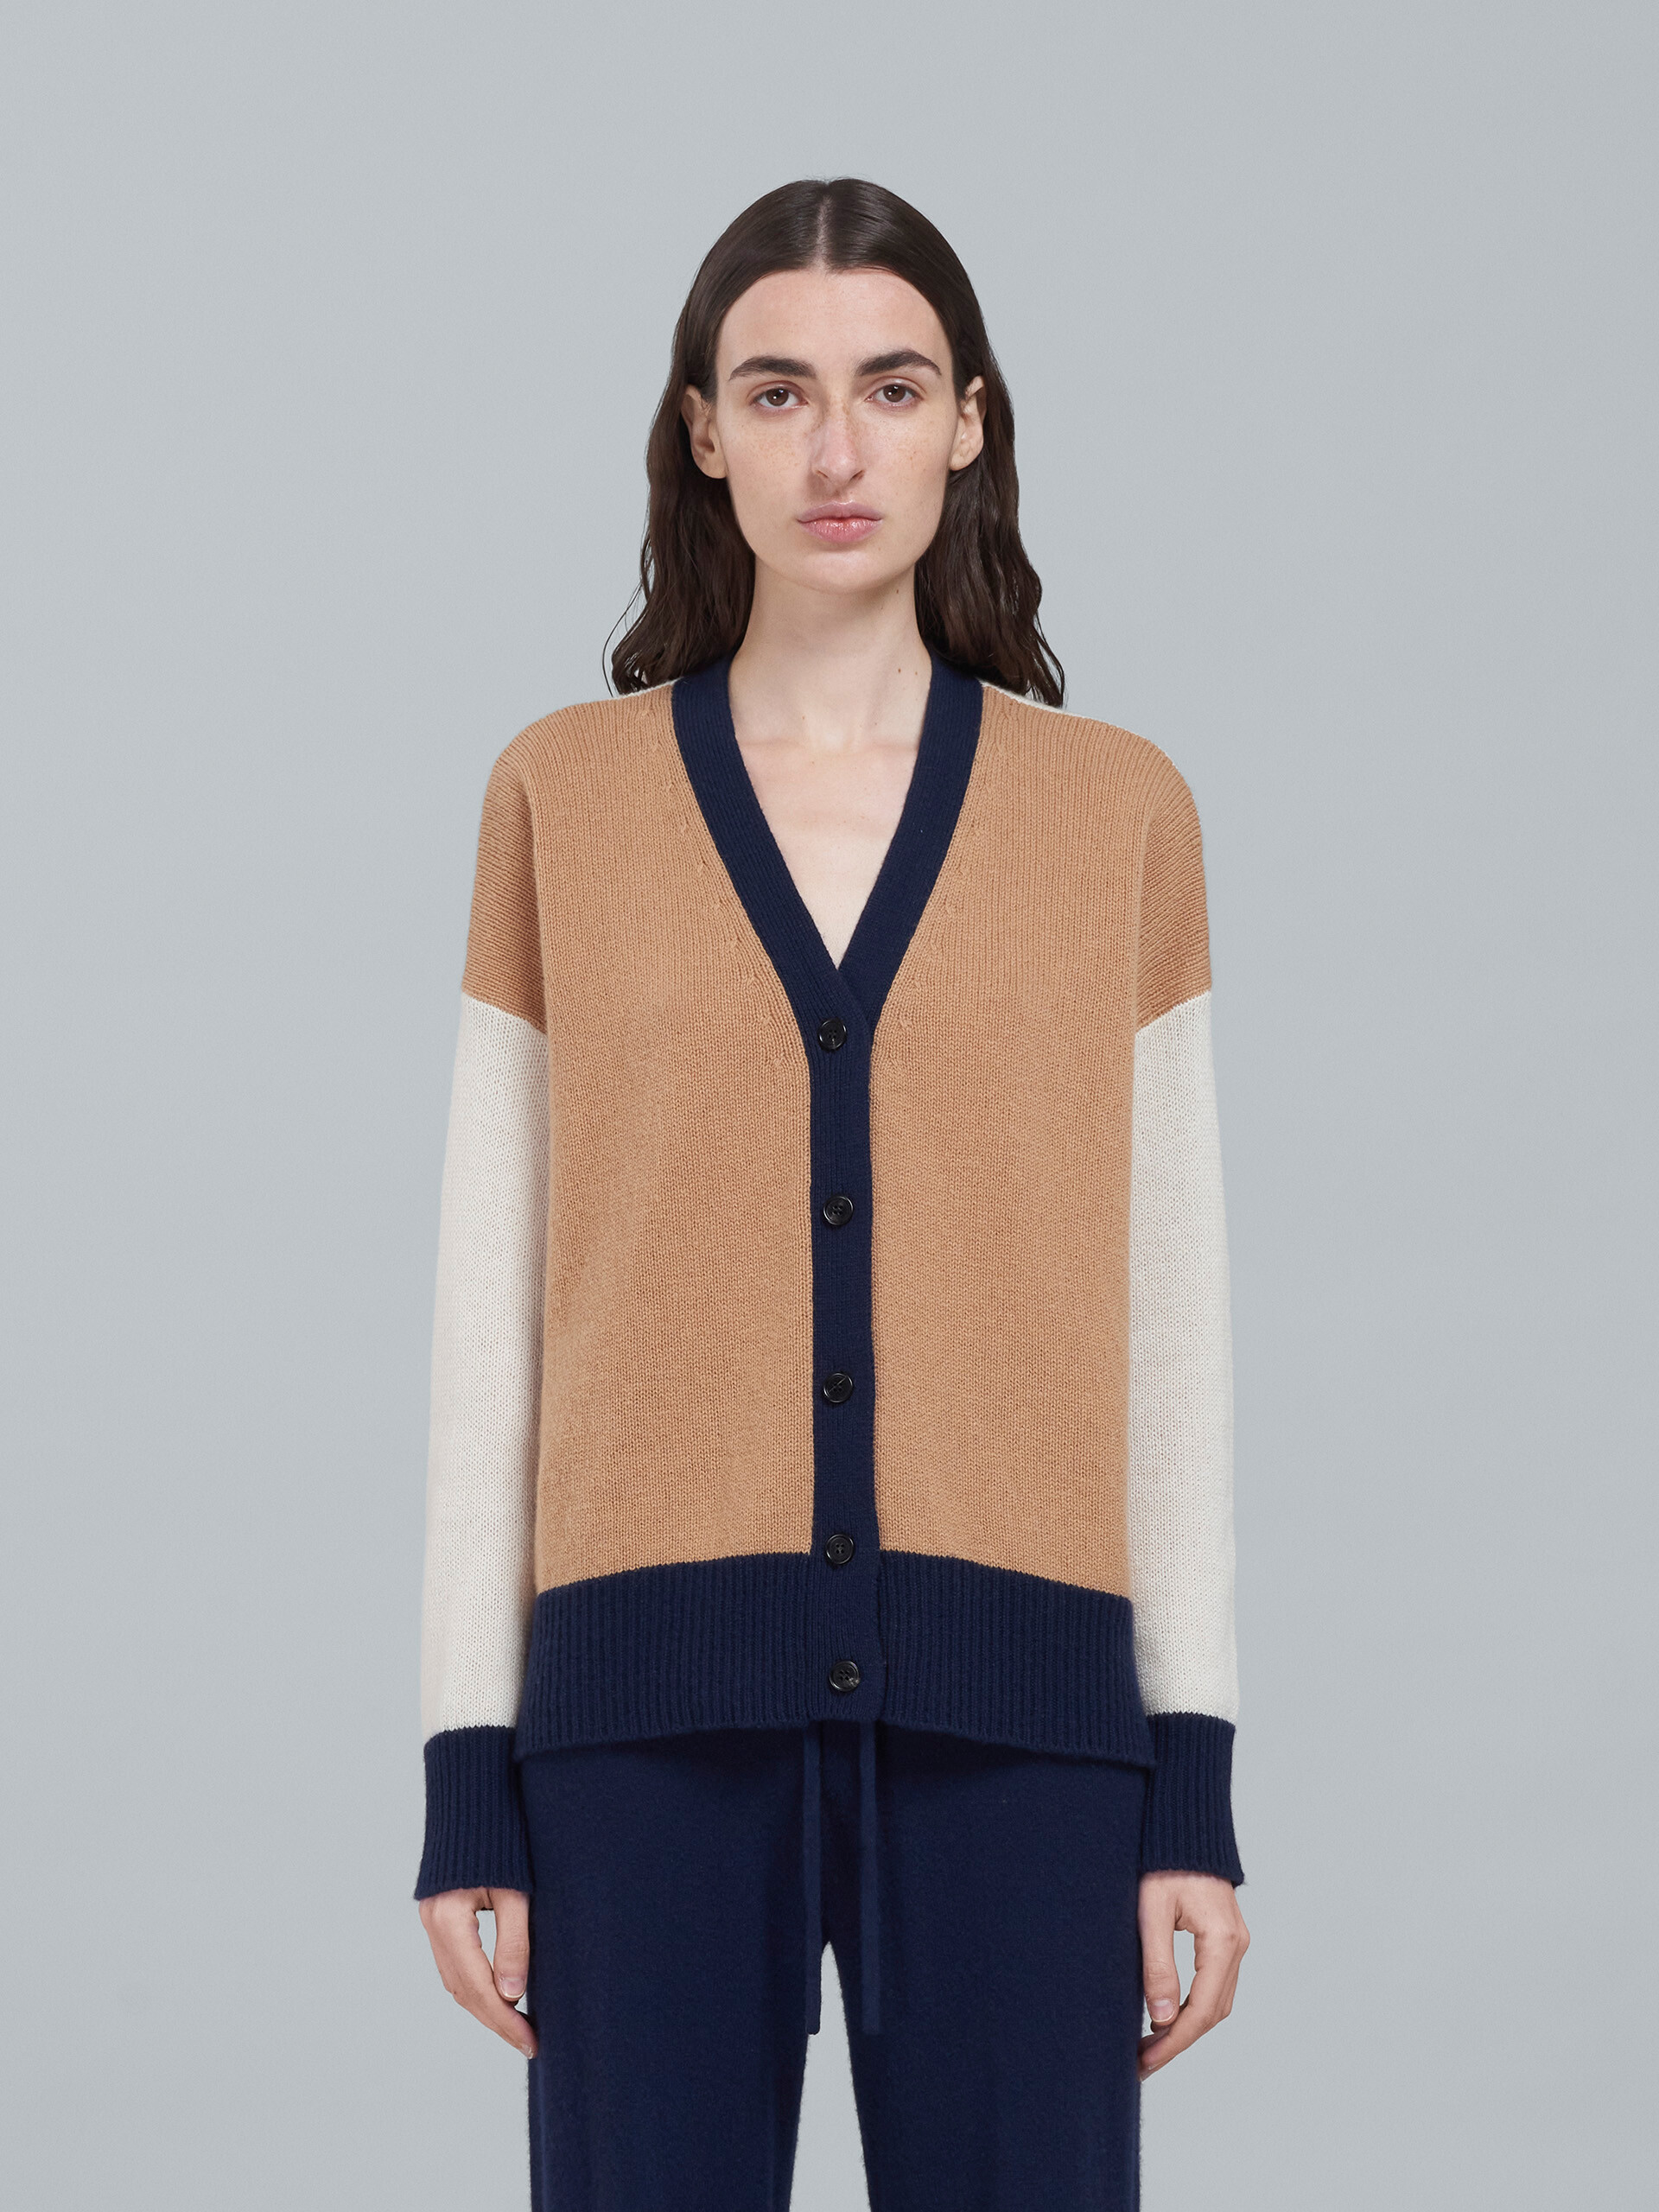 Colorblock cashmere cardigan - Pullovers - Image 2